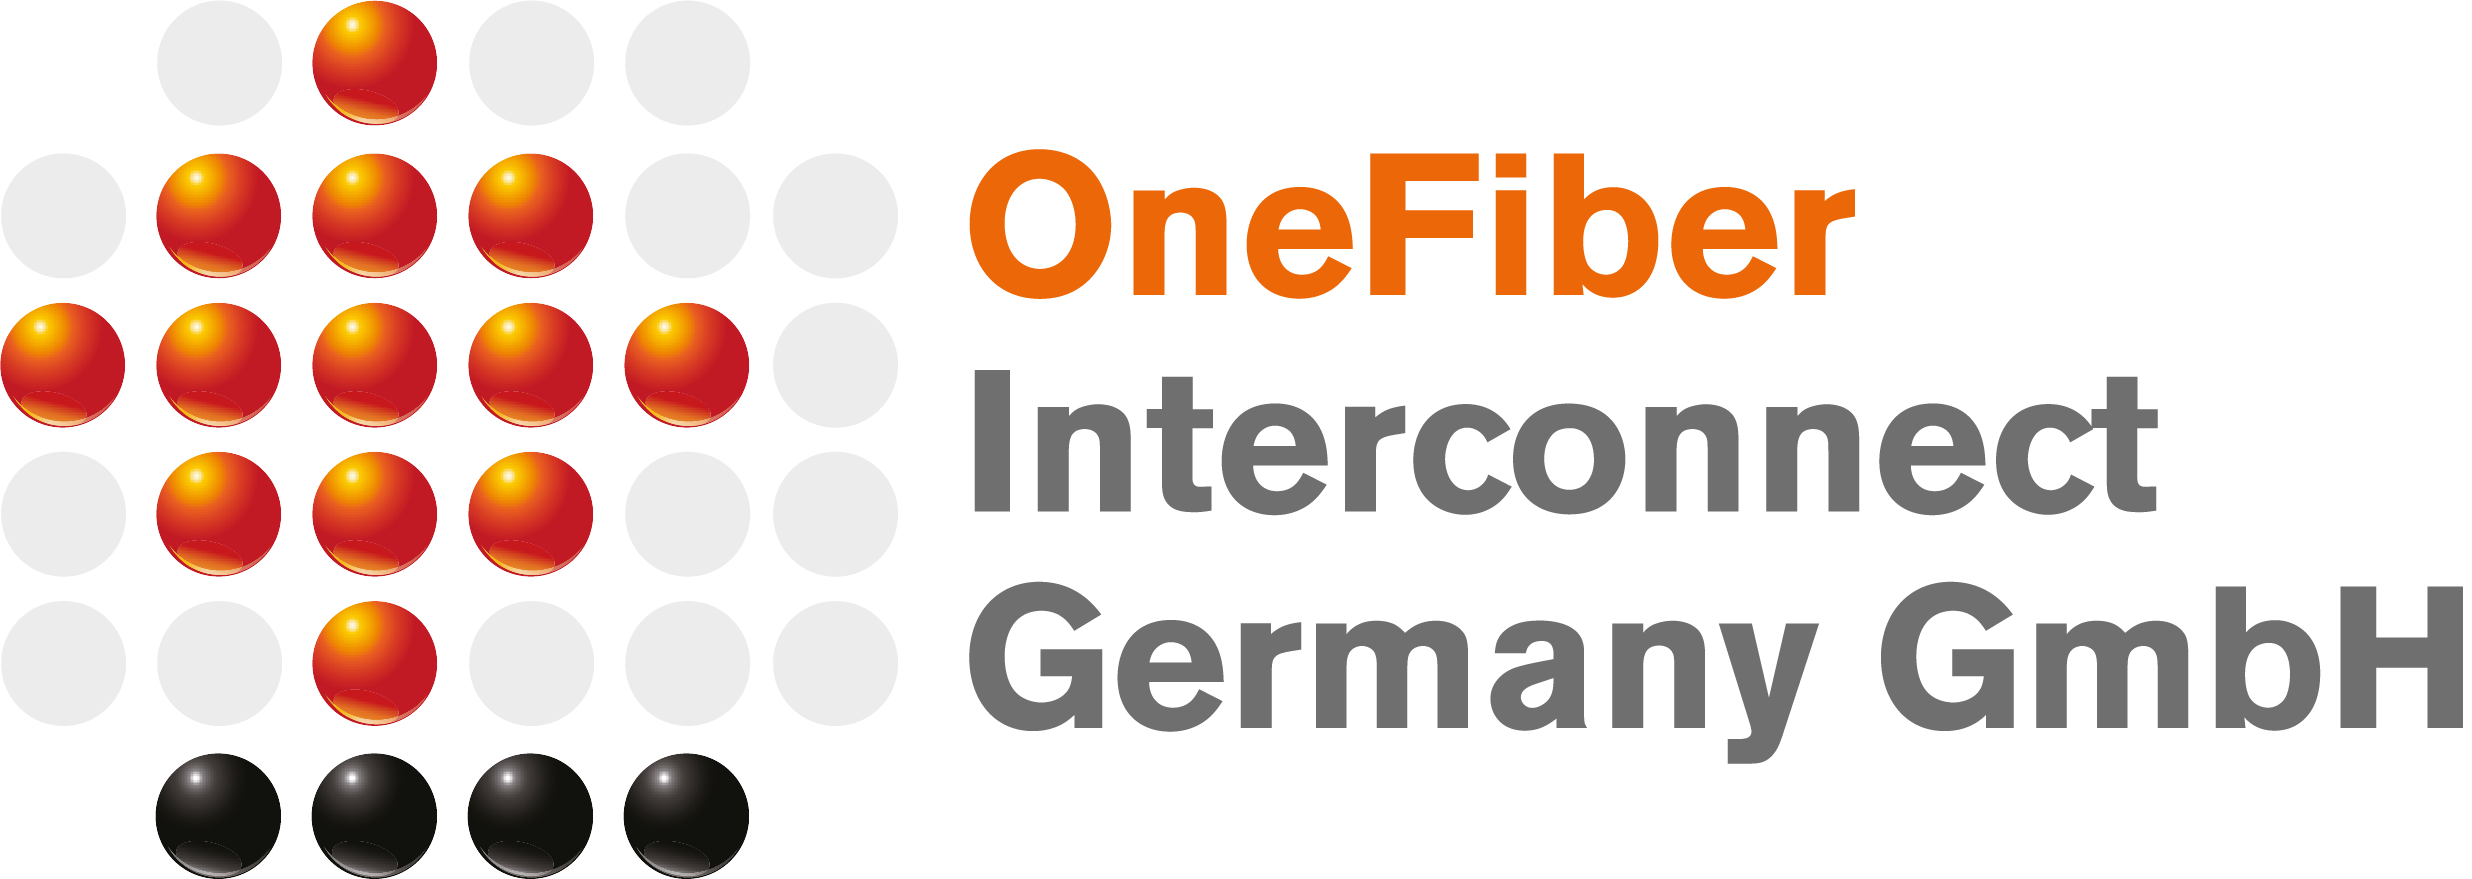 Logo OneFiber Interconnect Germany GmbH